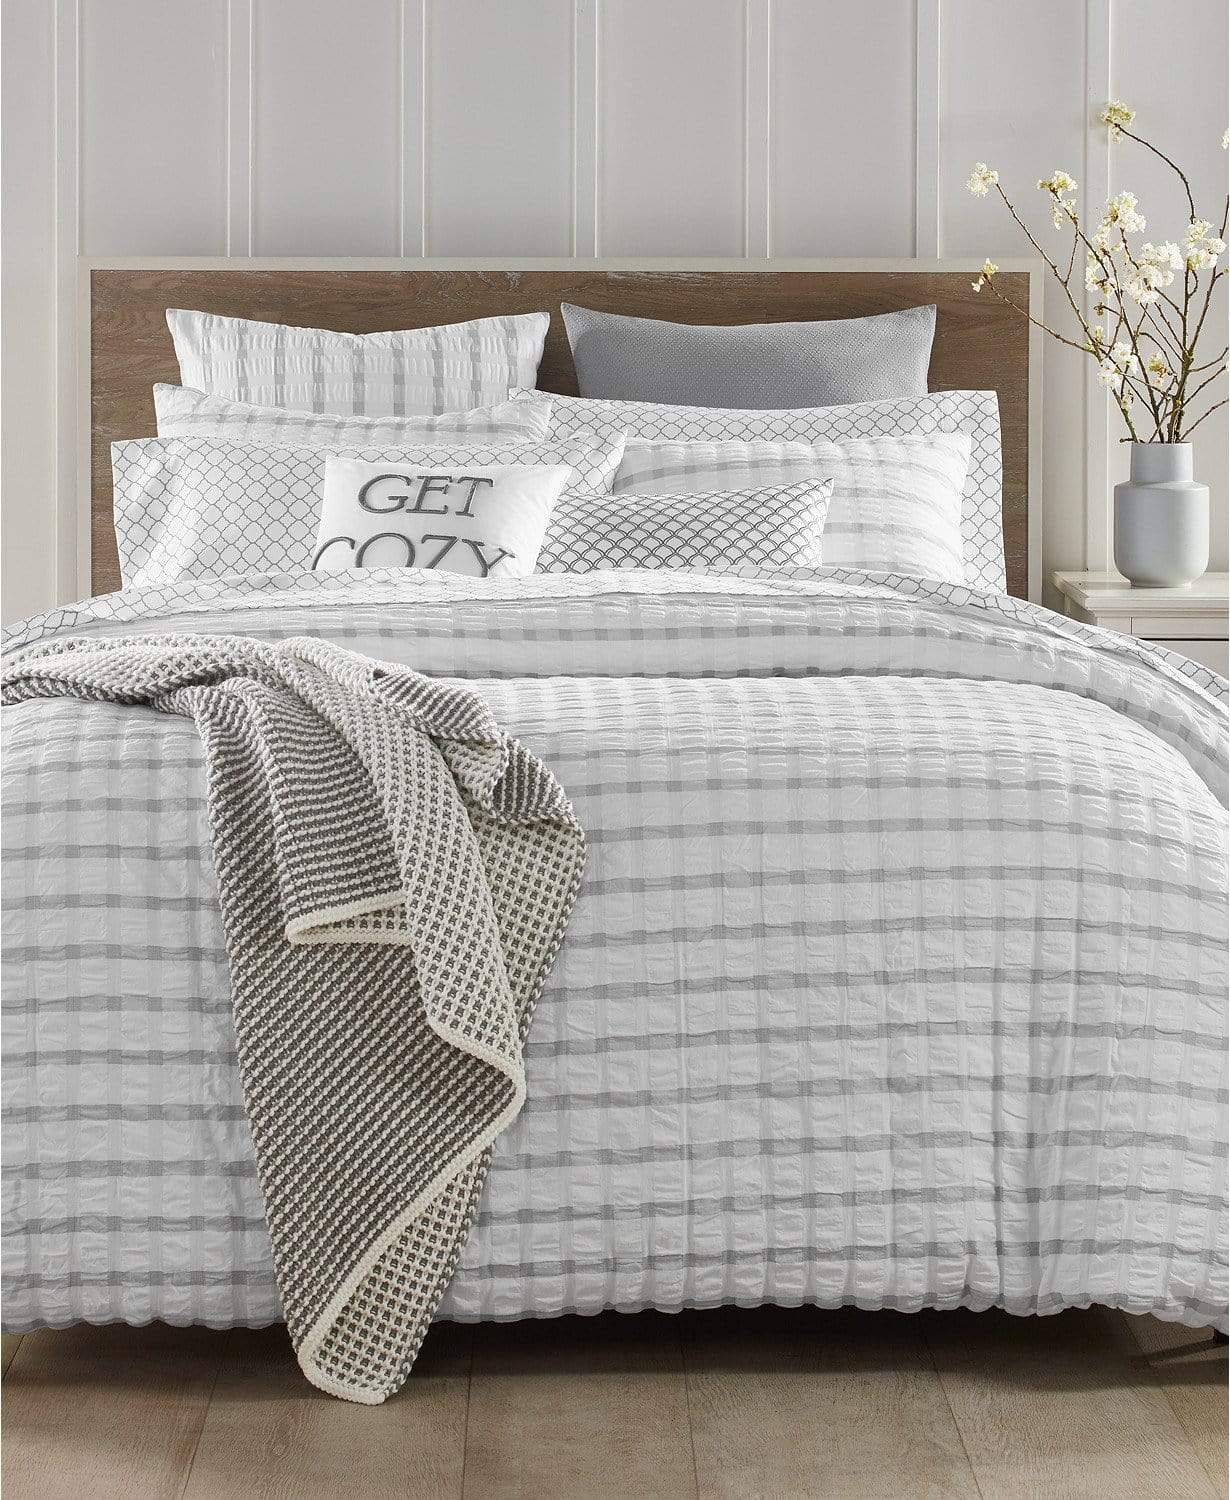 Charter Club Comforter/Quilt/Duvet King / White / Grey Damask Designs Seersucker 150 TC Comforter - 3 Pieces